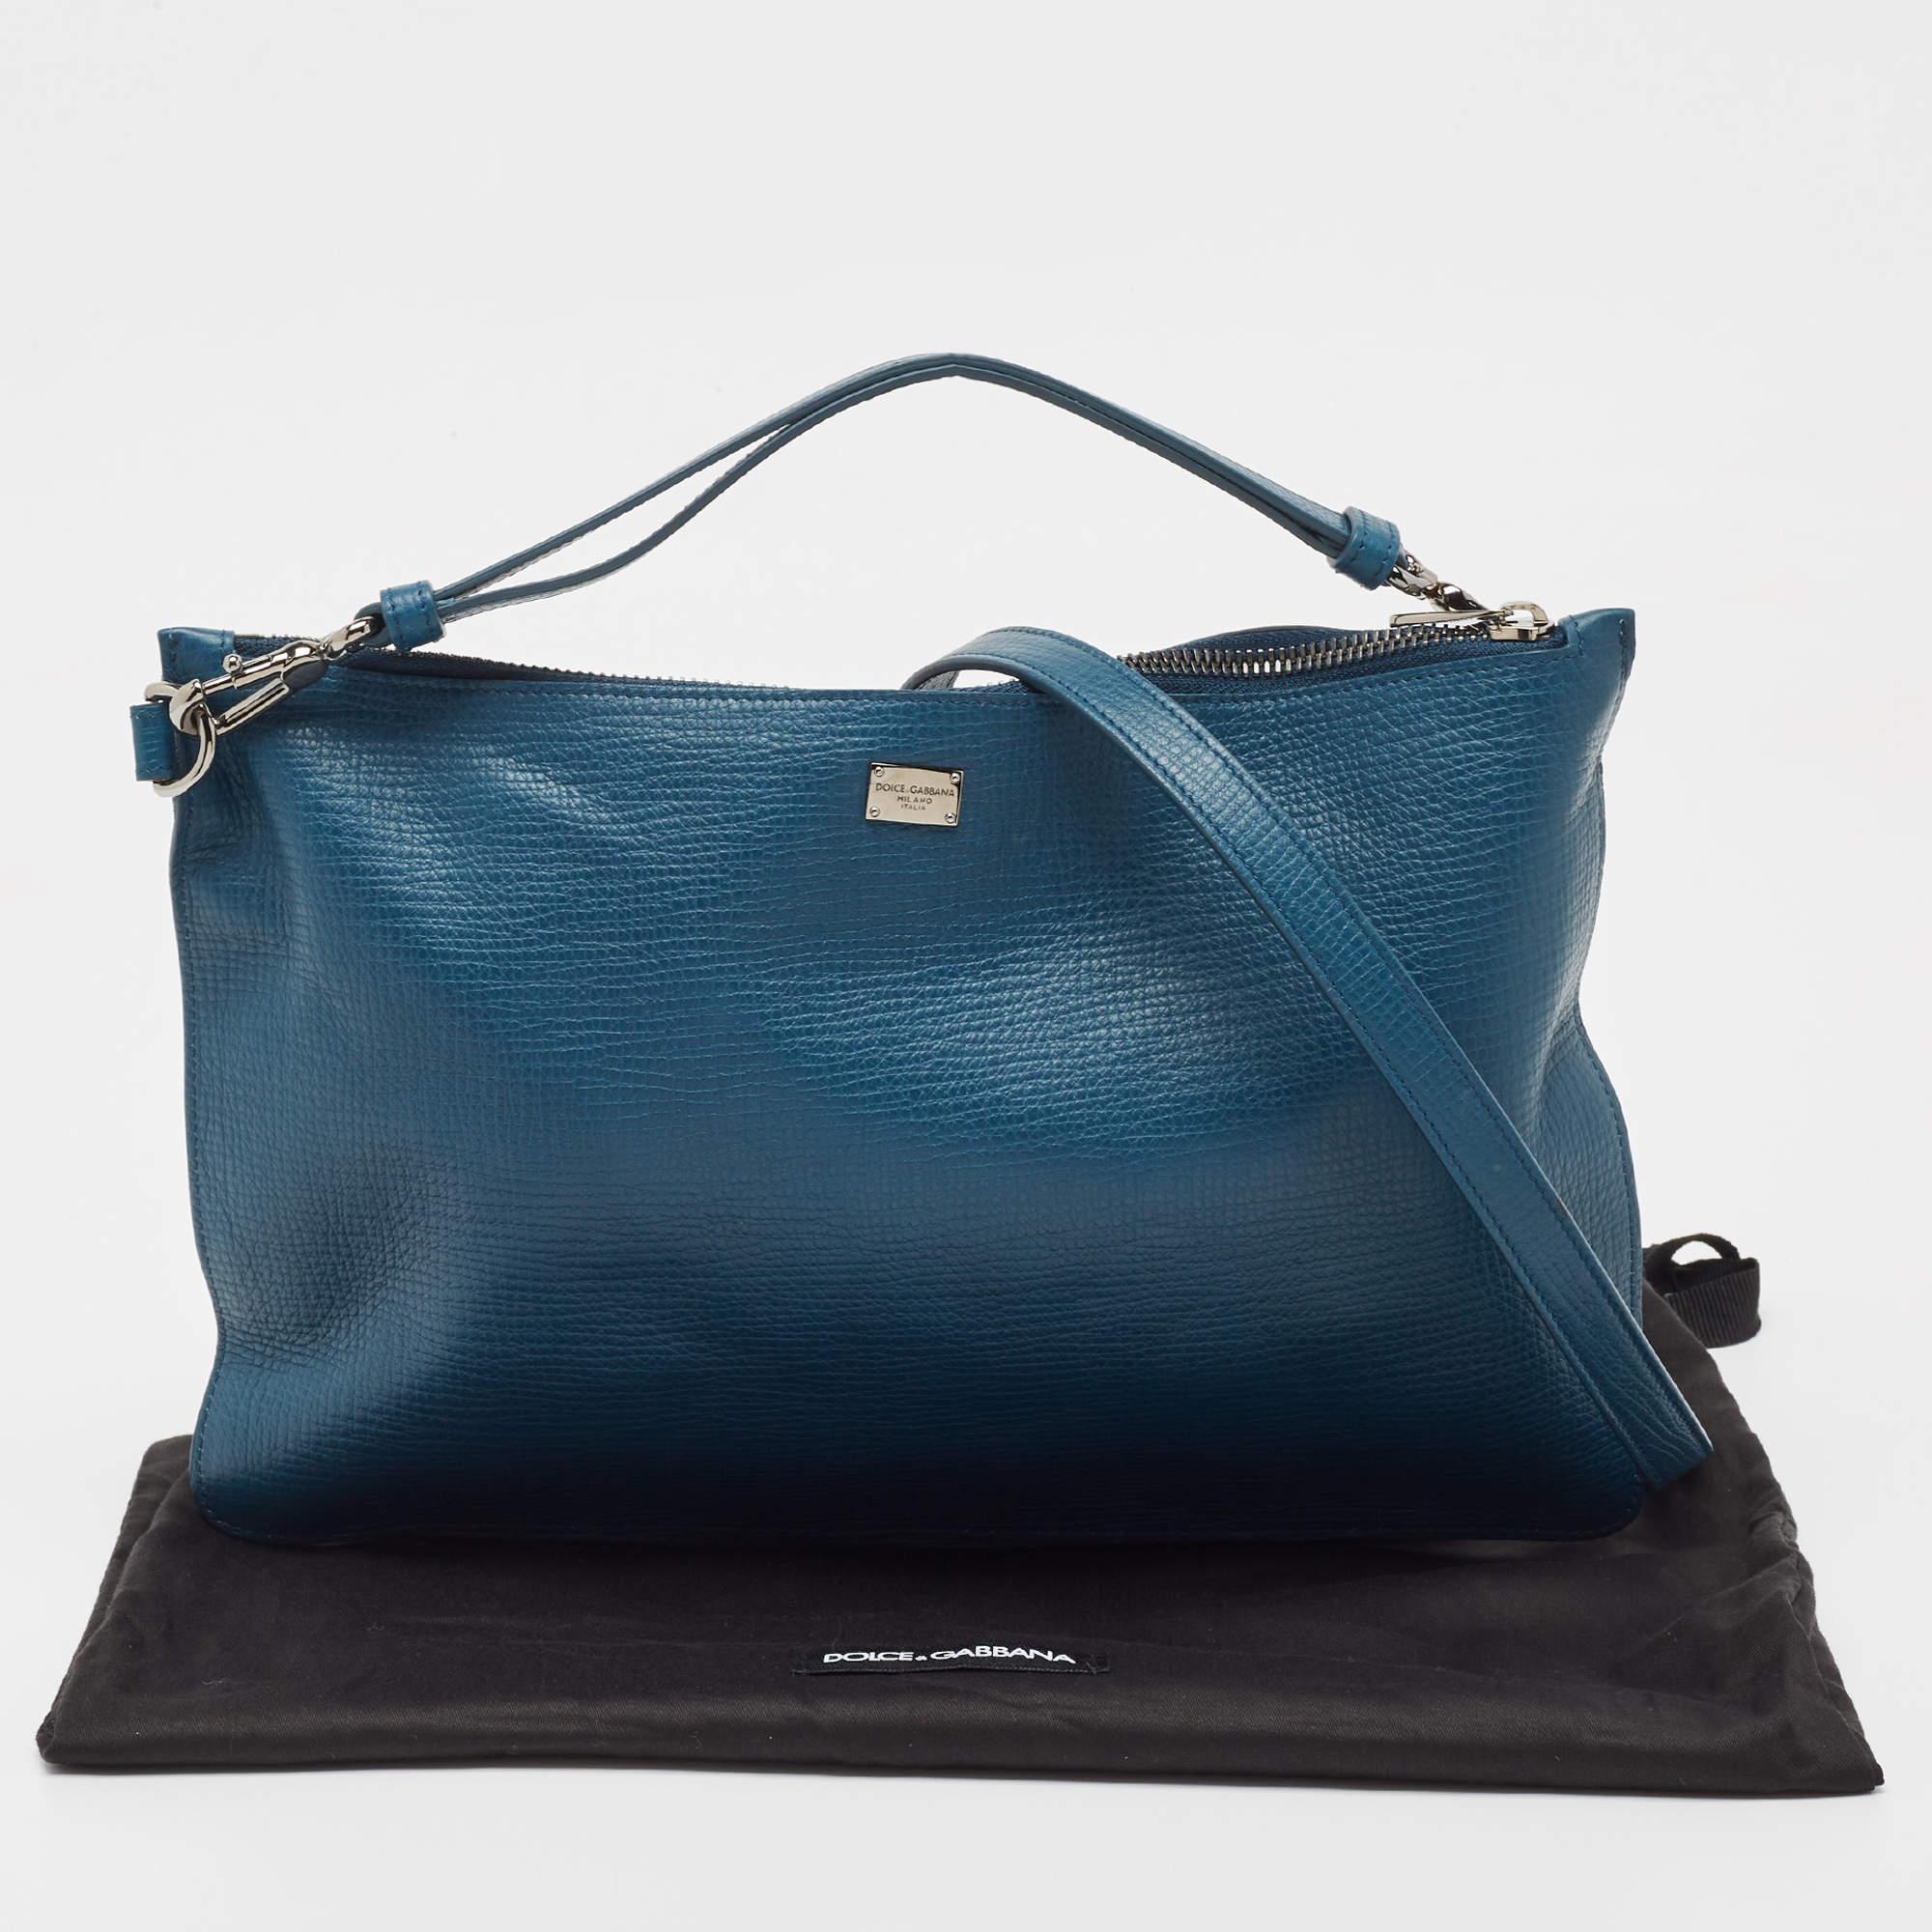 Dolce & Gabbana Blue Leather Oversized Clutch 8